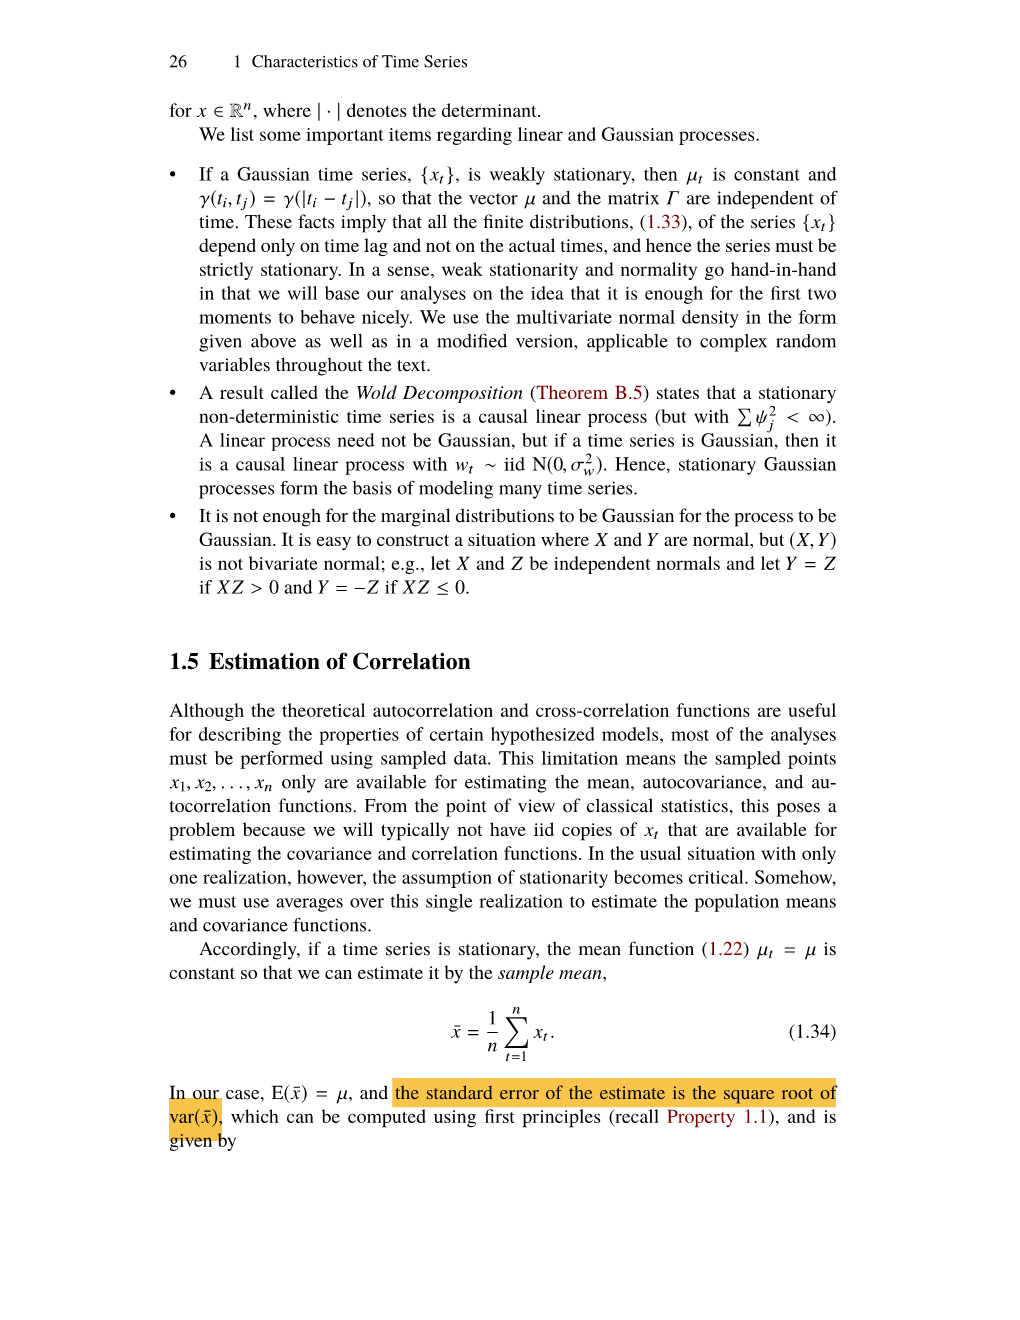 1.5 Estimation of Correlation